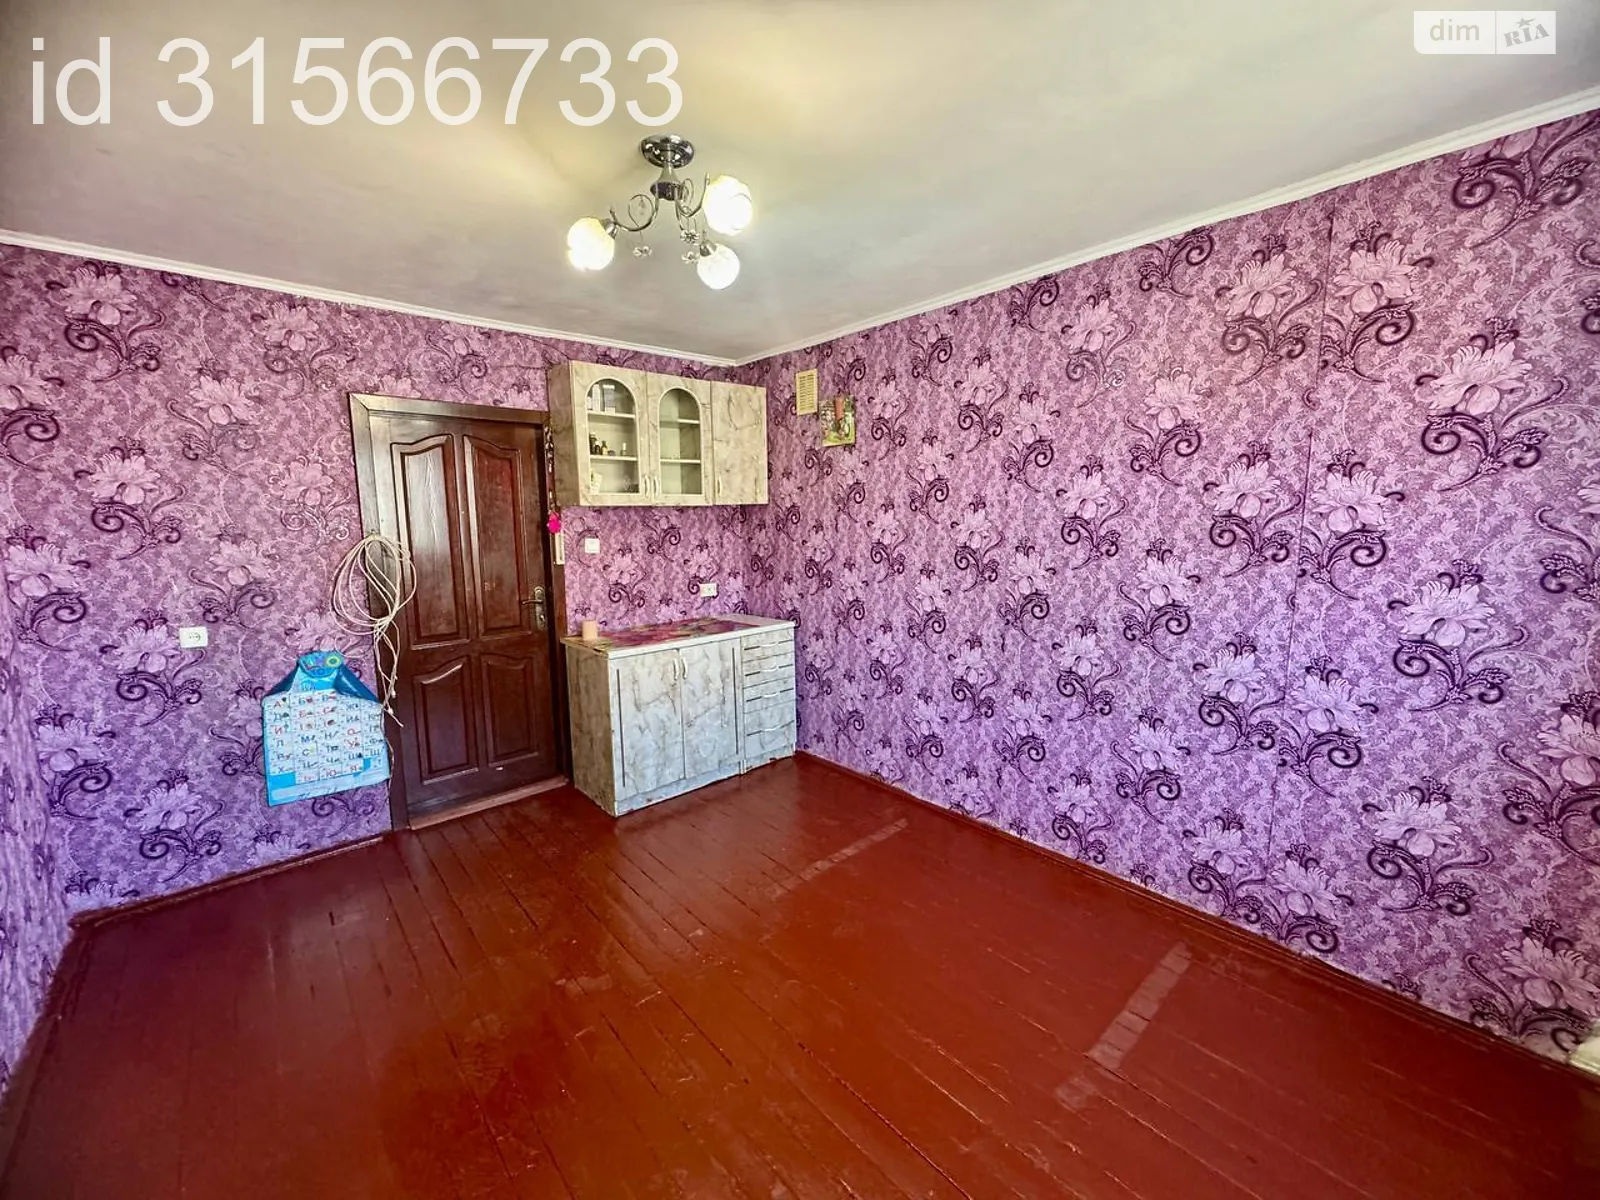 Продается комната 25 кв. м в Ровно, цена: 8000 $